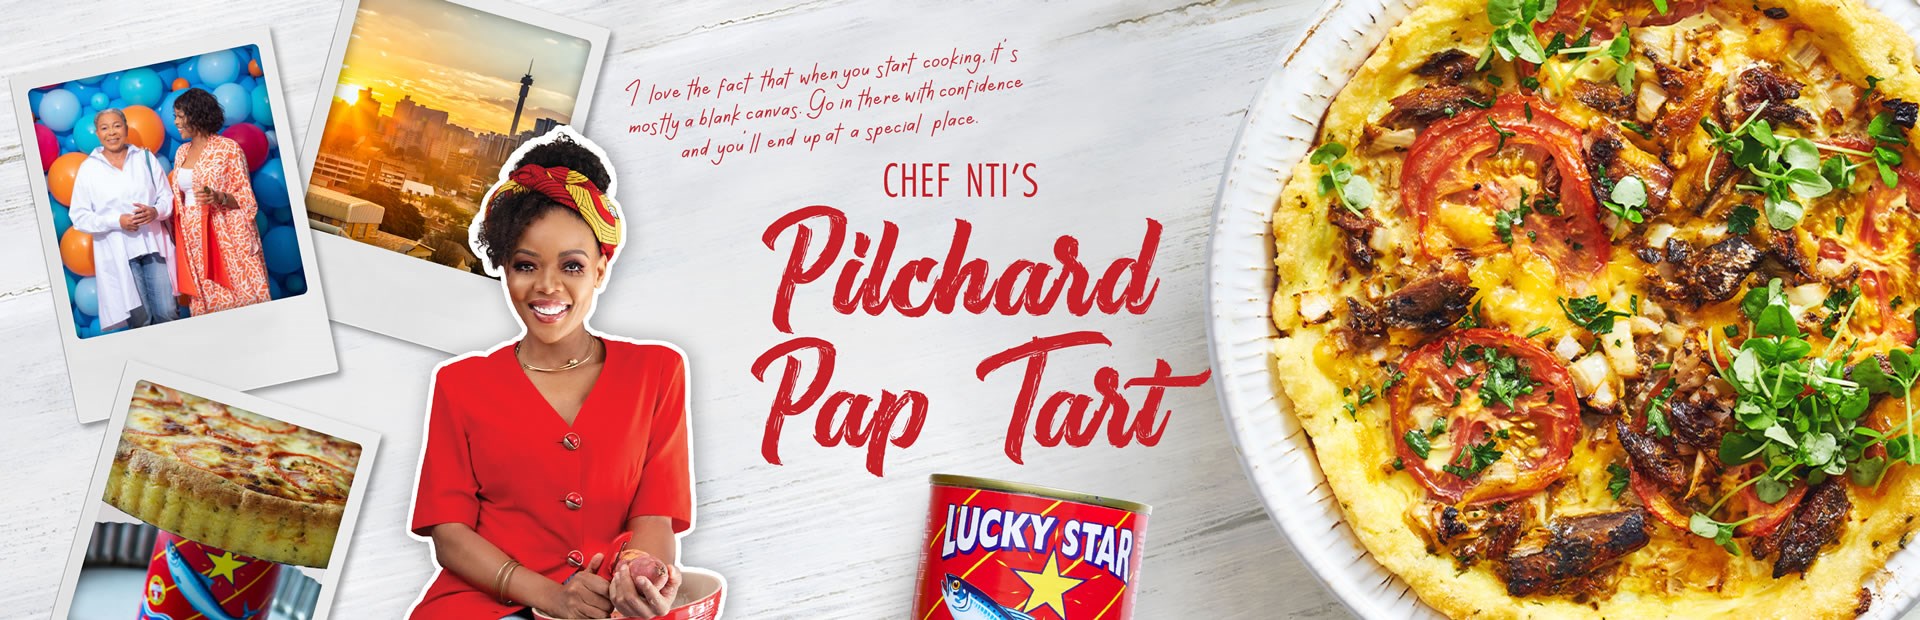 CHEF NTI’S Pilchard Pap Tart